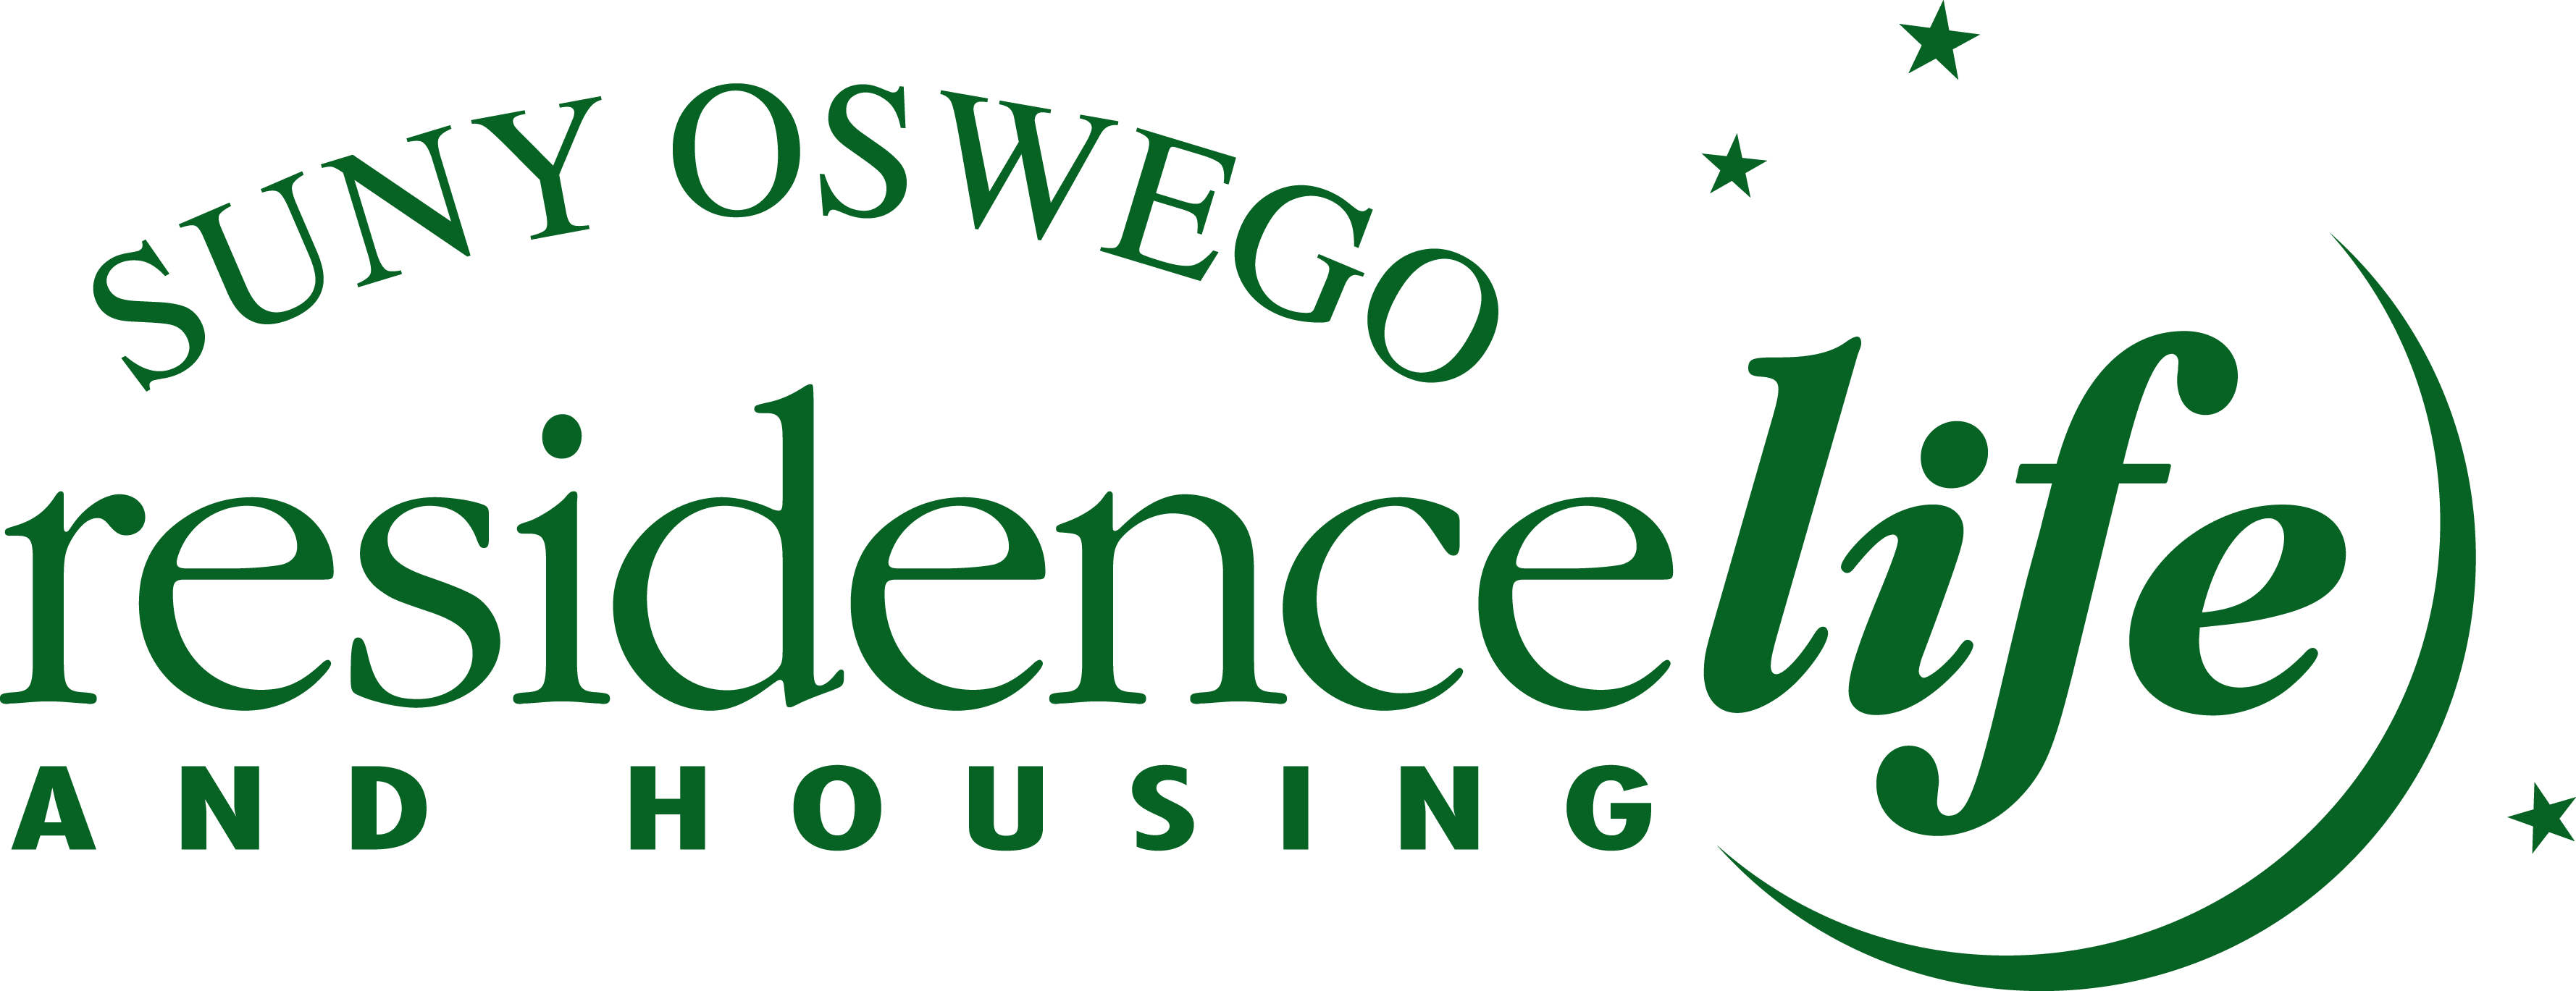 SUNY Oswego Residence Life and Housing logo link to home